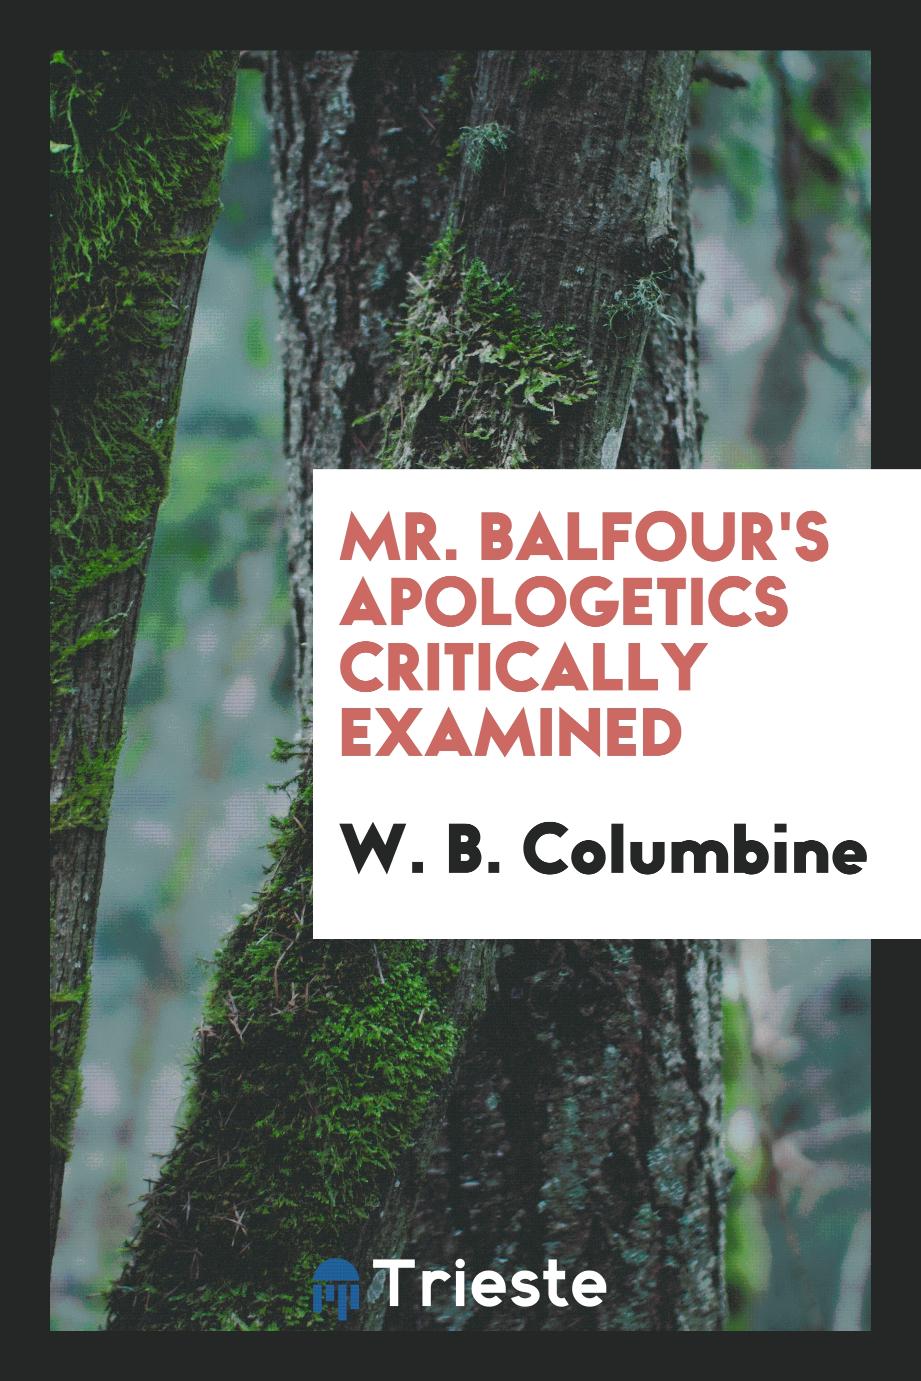 Mr. Balfour's apologetics critically examined